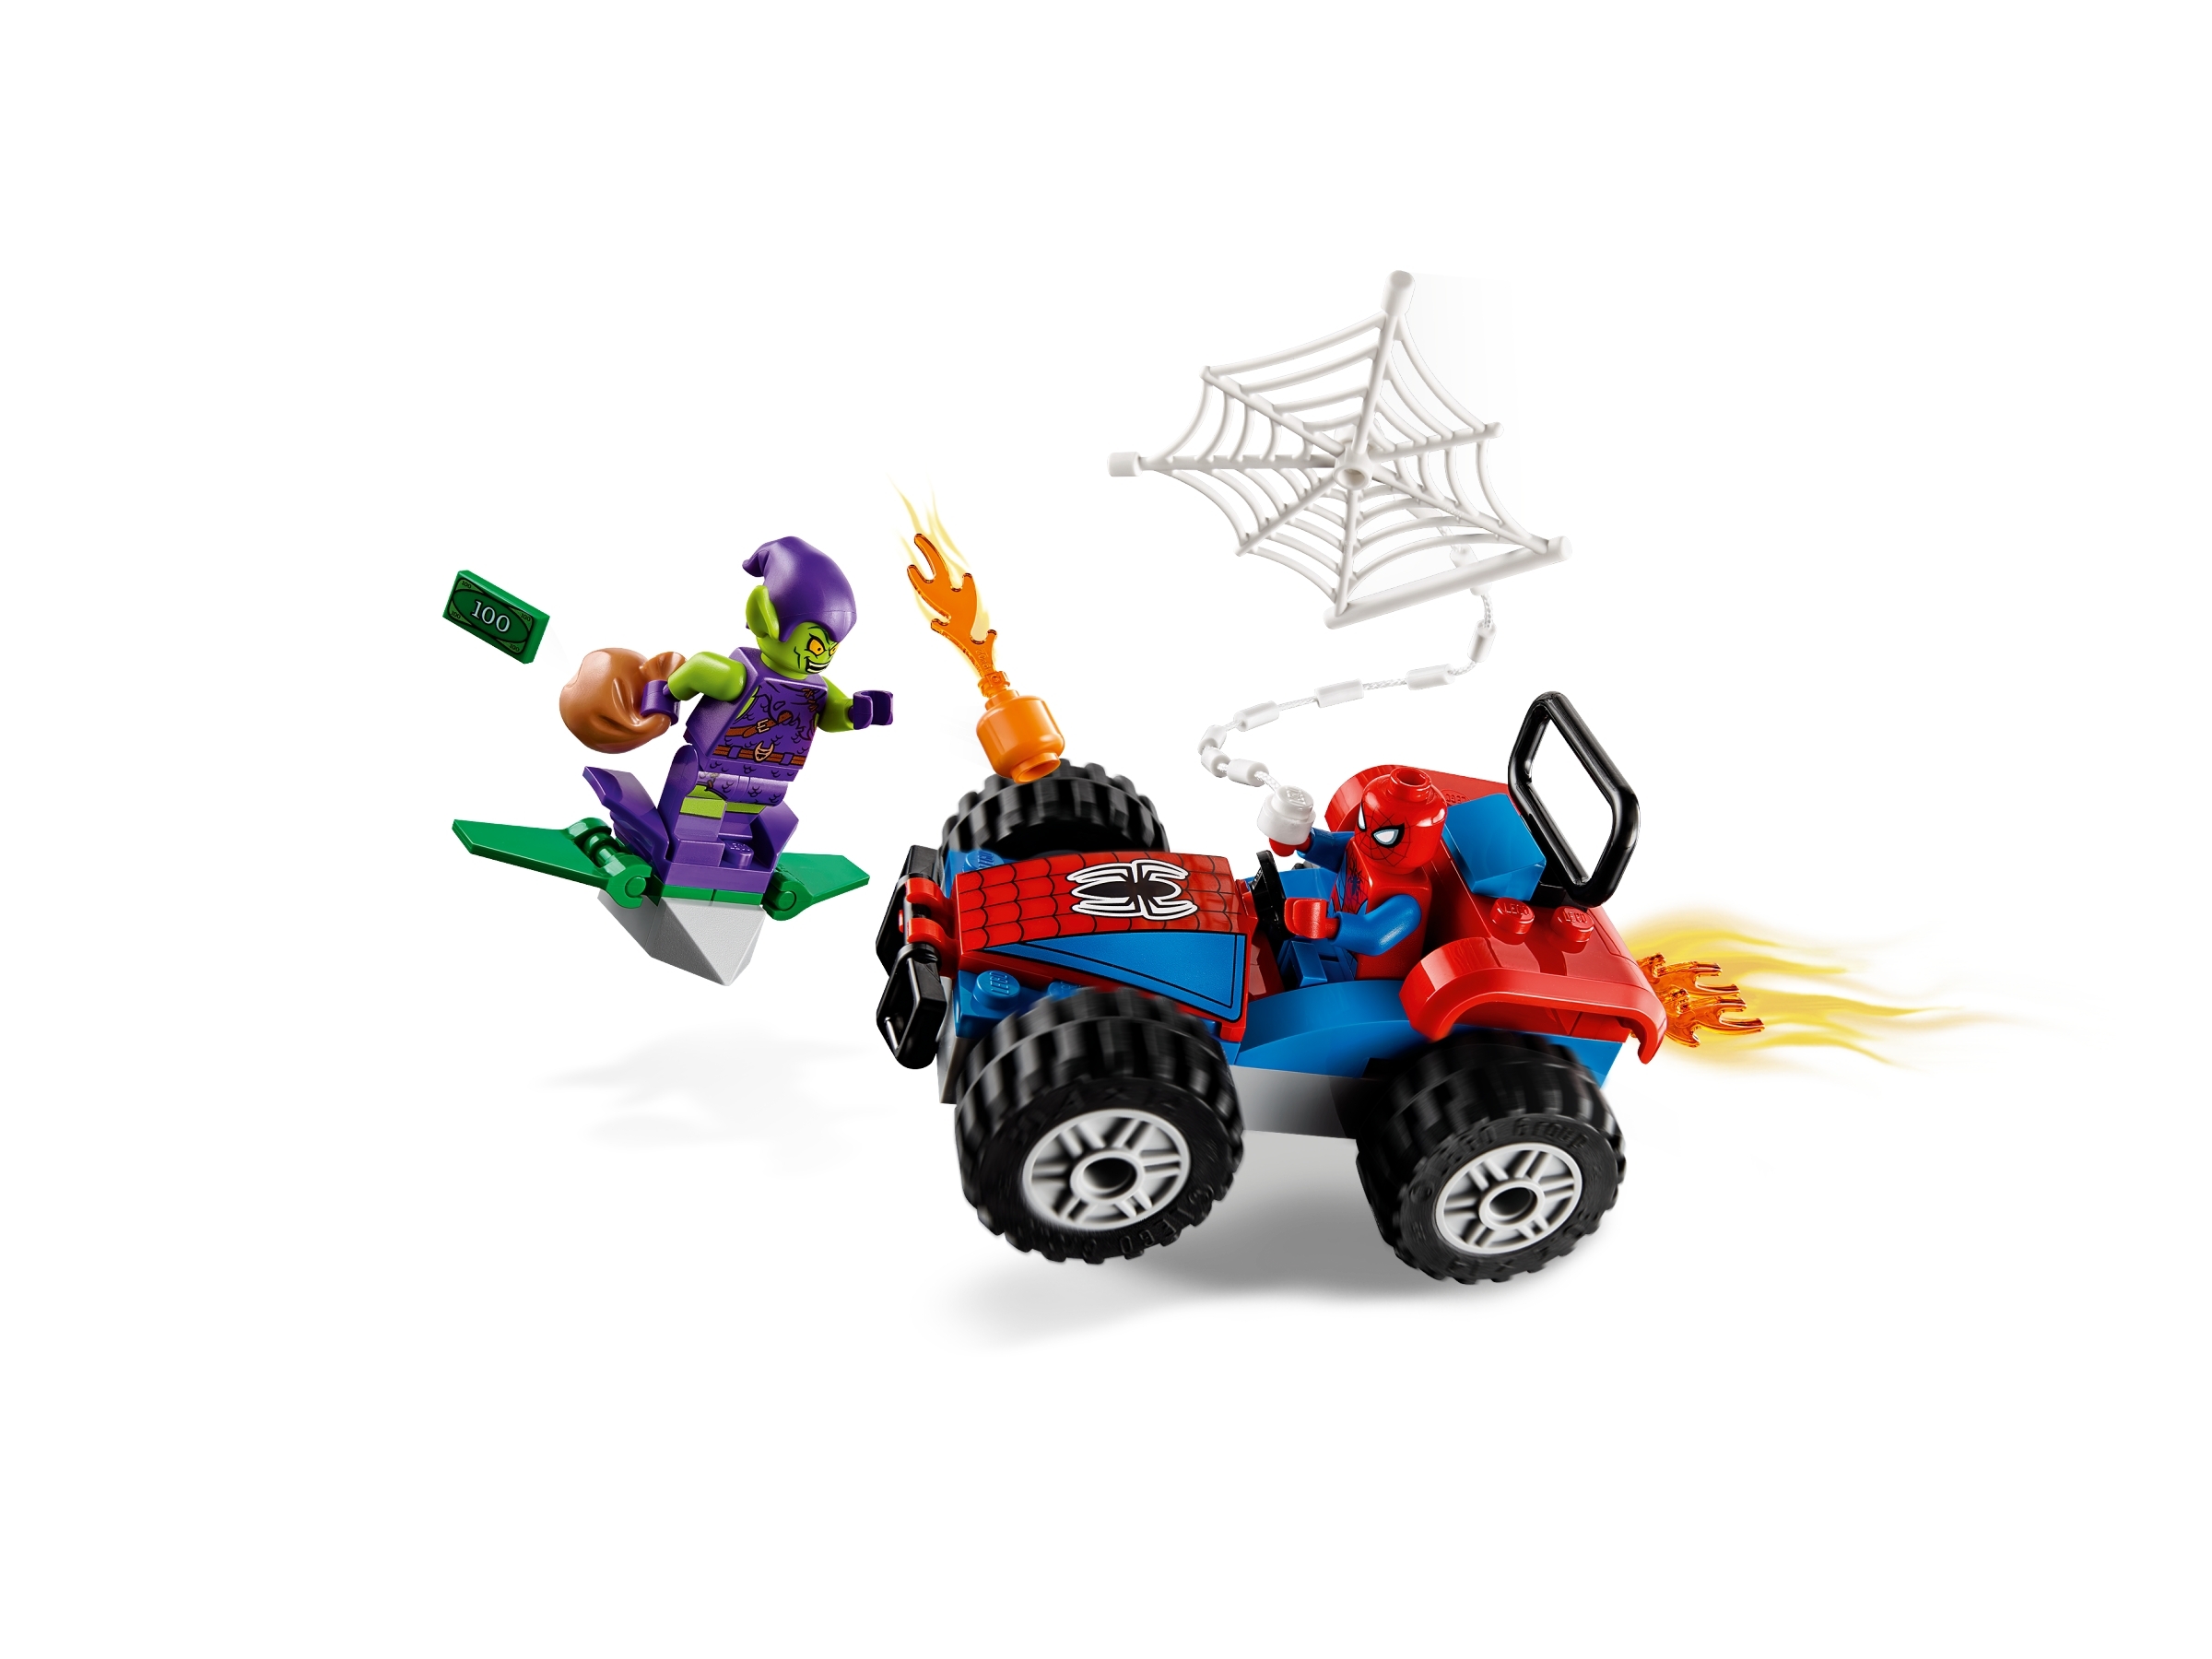 spiderman lego 76133